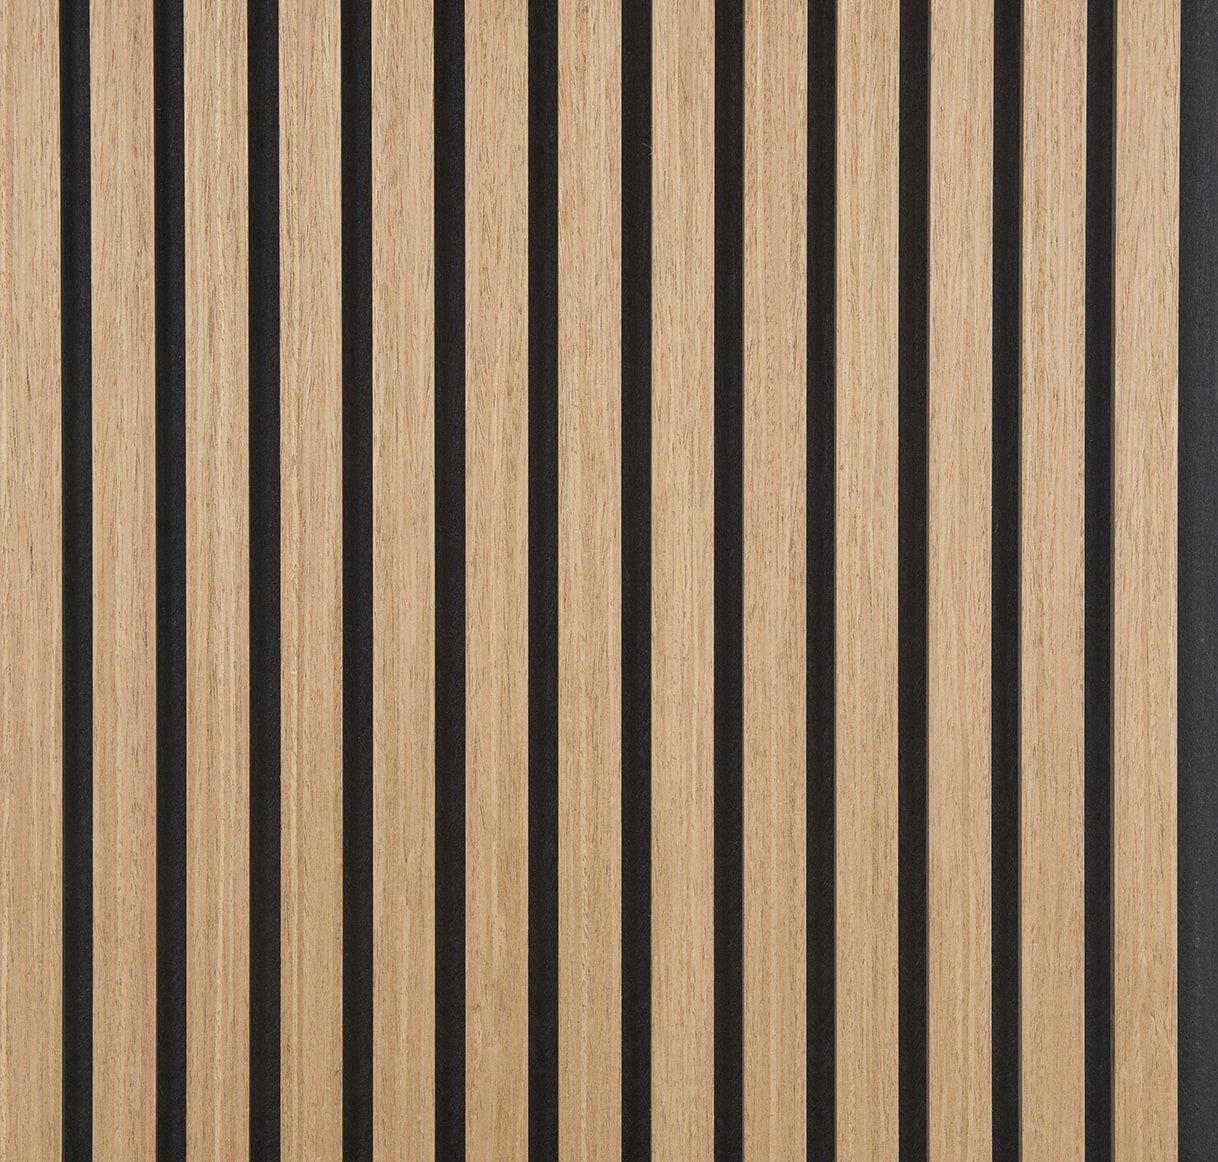 Acoustic Wood Panels 244x52 cm Harmony Max - Oiled Oak BEST BUY ✅ - HomeHarmony.eu